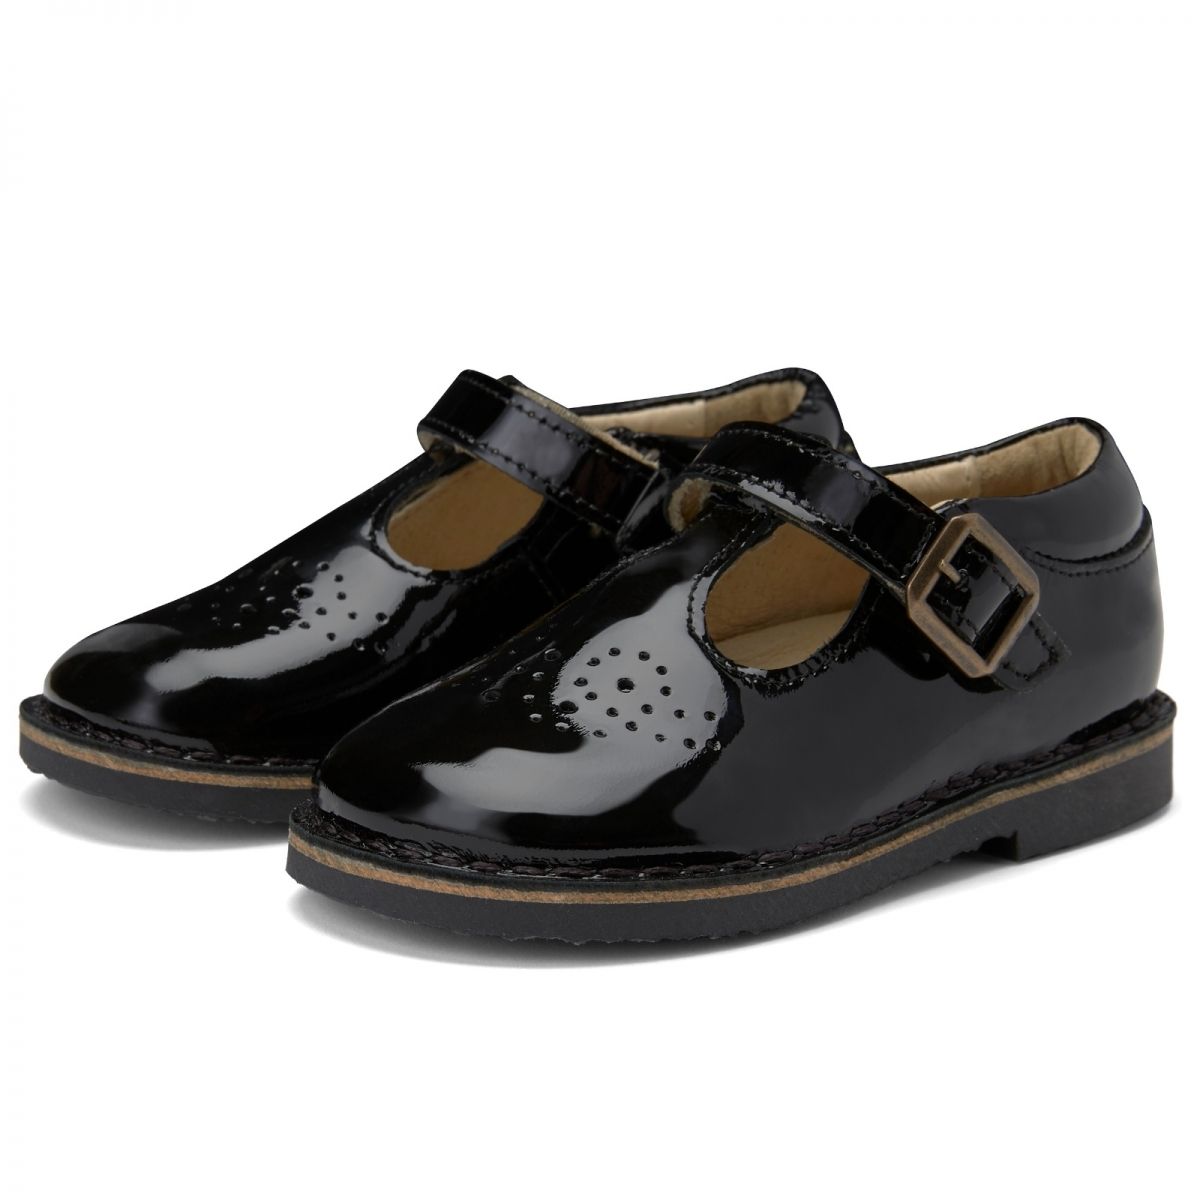 Young Soles T-bar Shoe Penny Patent Leather black PE-PATENT-BLACK 